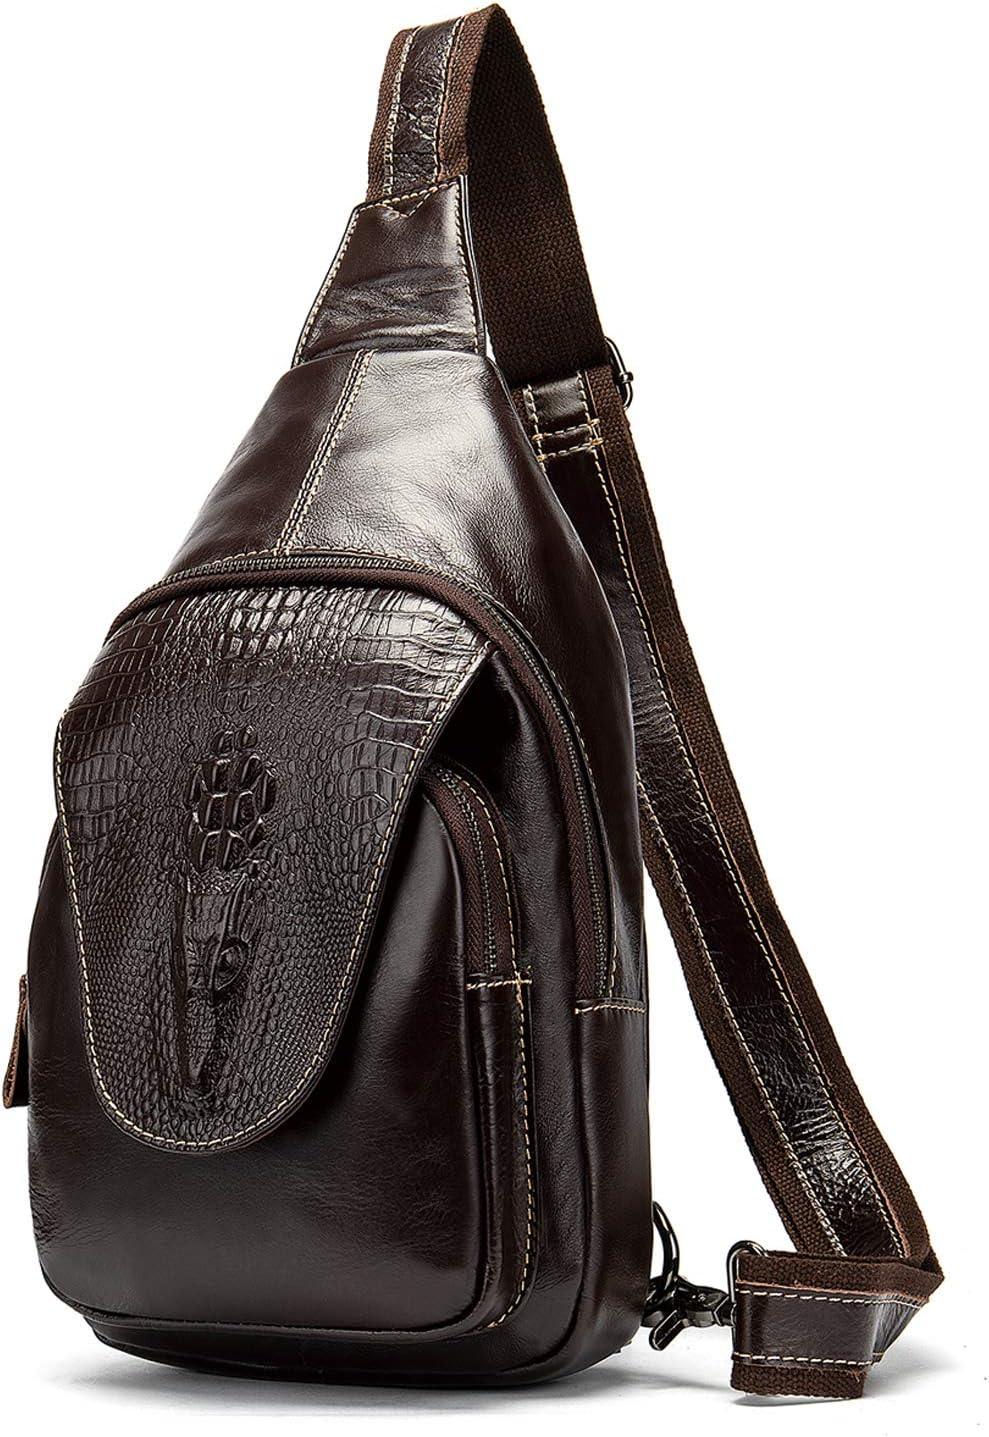 FR Fashion Co. 12" Leather Crocodile Embossed Sling Bag - FR Fashion Co. 